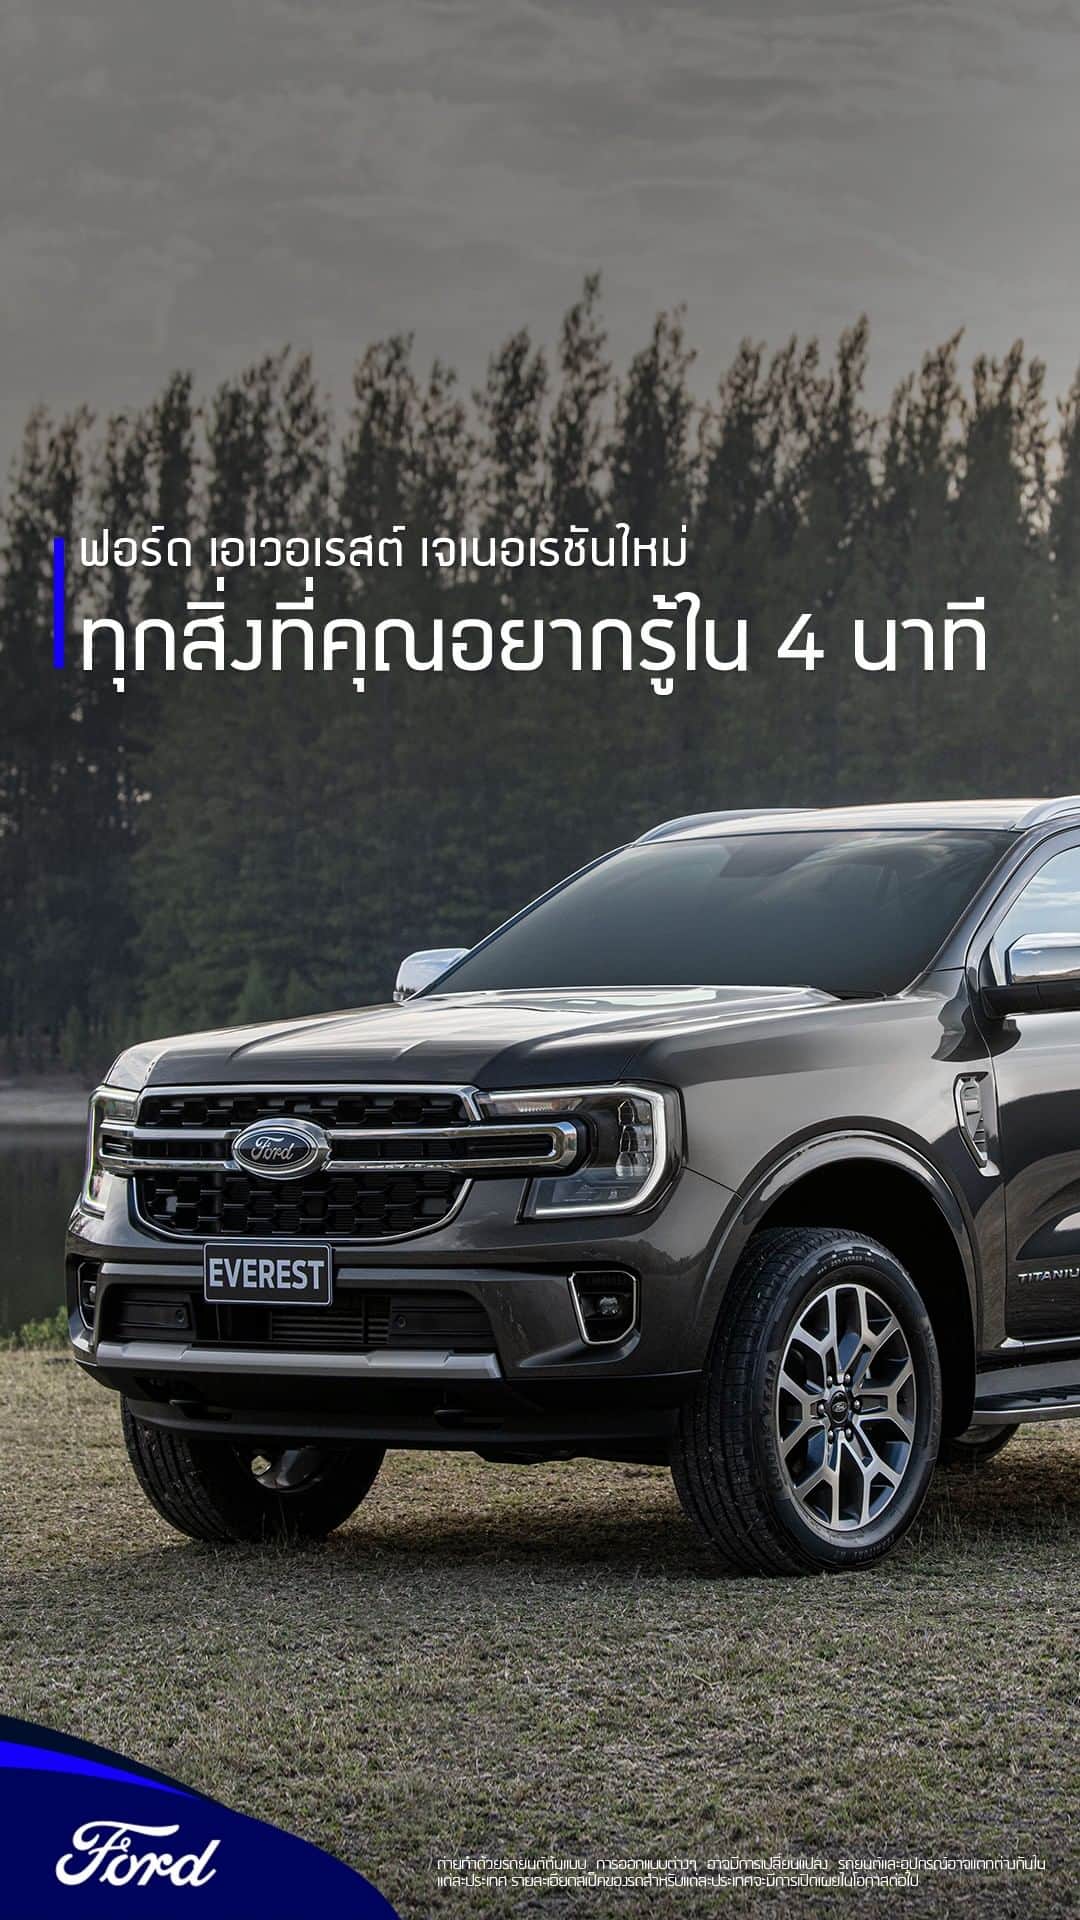 Ford Thailandのインスタグラム：「แข็งแกร่ง พร้อมลุย สะดวกสบาย และชาญฉลาด #NextGenEverest ผสานงานวิศวกรรมสำหรับการผจญภัยเข้ากับการออกแบบเพื่อความสุนทรีย์ ฟอร์ด เอเวอเรสต์ เจนฯ ใหม่ จะช่วยให้ทุกการเดินทางเป็นเรื่องน่าประทับใจ ด้วยสมรรถนะที่โดดเด่น ภายในห้องโดยสารสุดพรีเมี่ยม อัดแน่นด้วยเทคโนโลยีและอุปกรณ์ความปลอดภัยล้ำสมัยมากมาย #SeekYourExperience ลงทะเบียนเพื่อรับข่าวเกี่ยวกับฟอร์ด เอเวอเรสต์ เจเนอเรชัน ใหม่ ได้ที่นี่ https://ford.to/3pmiqxy」